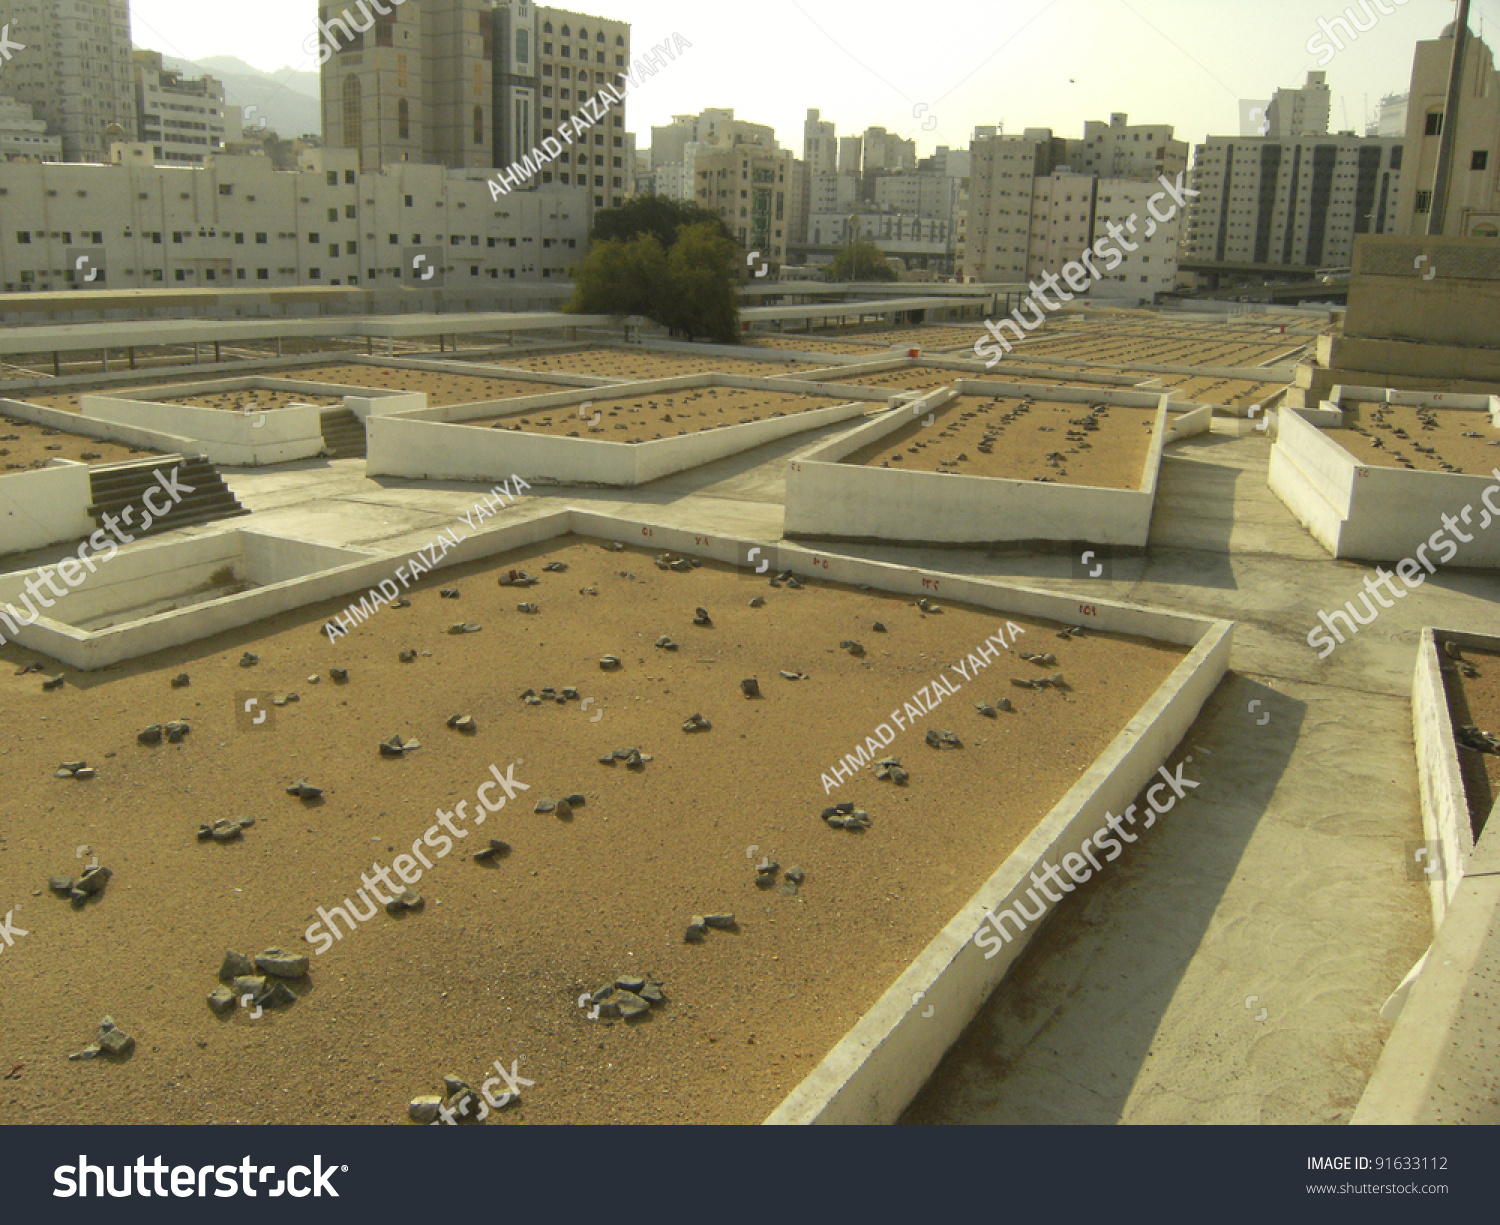 кладбище аль баки в медине фото